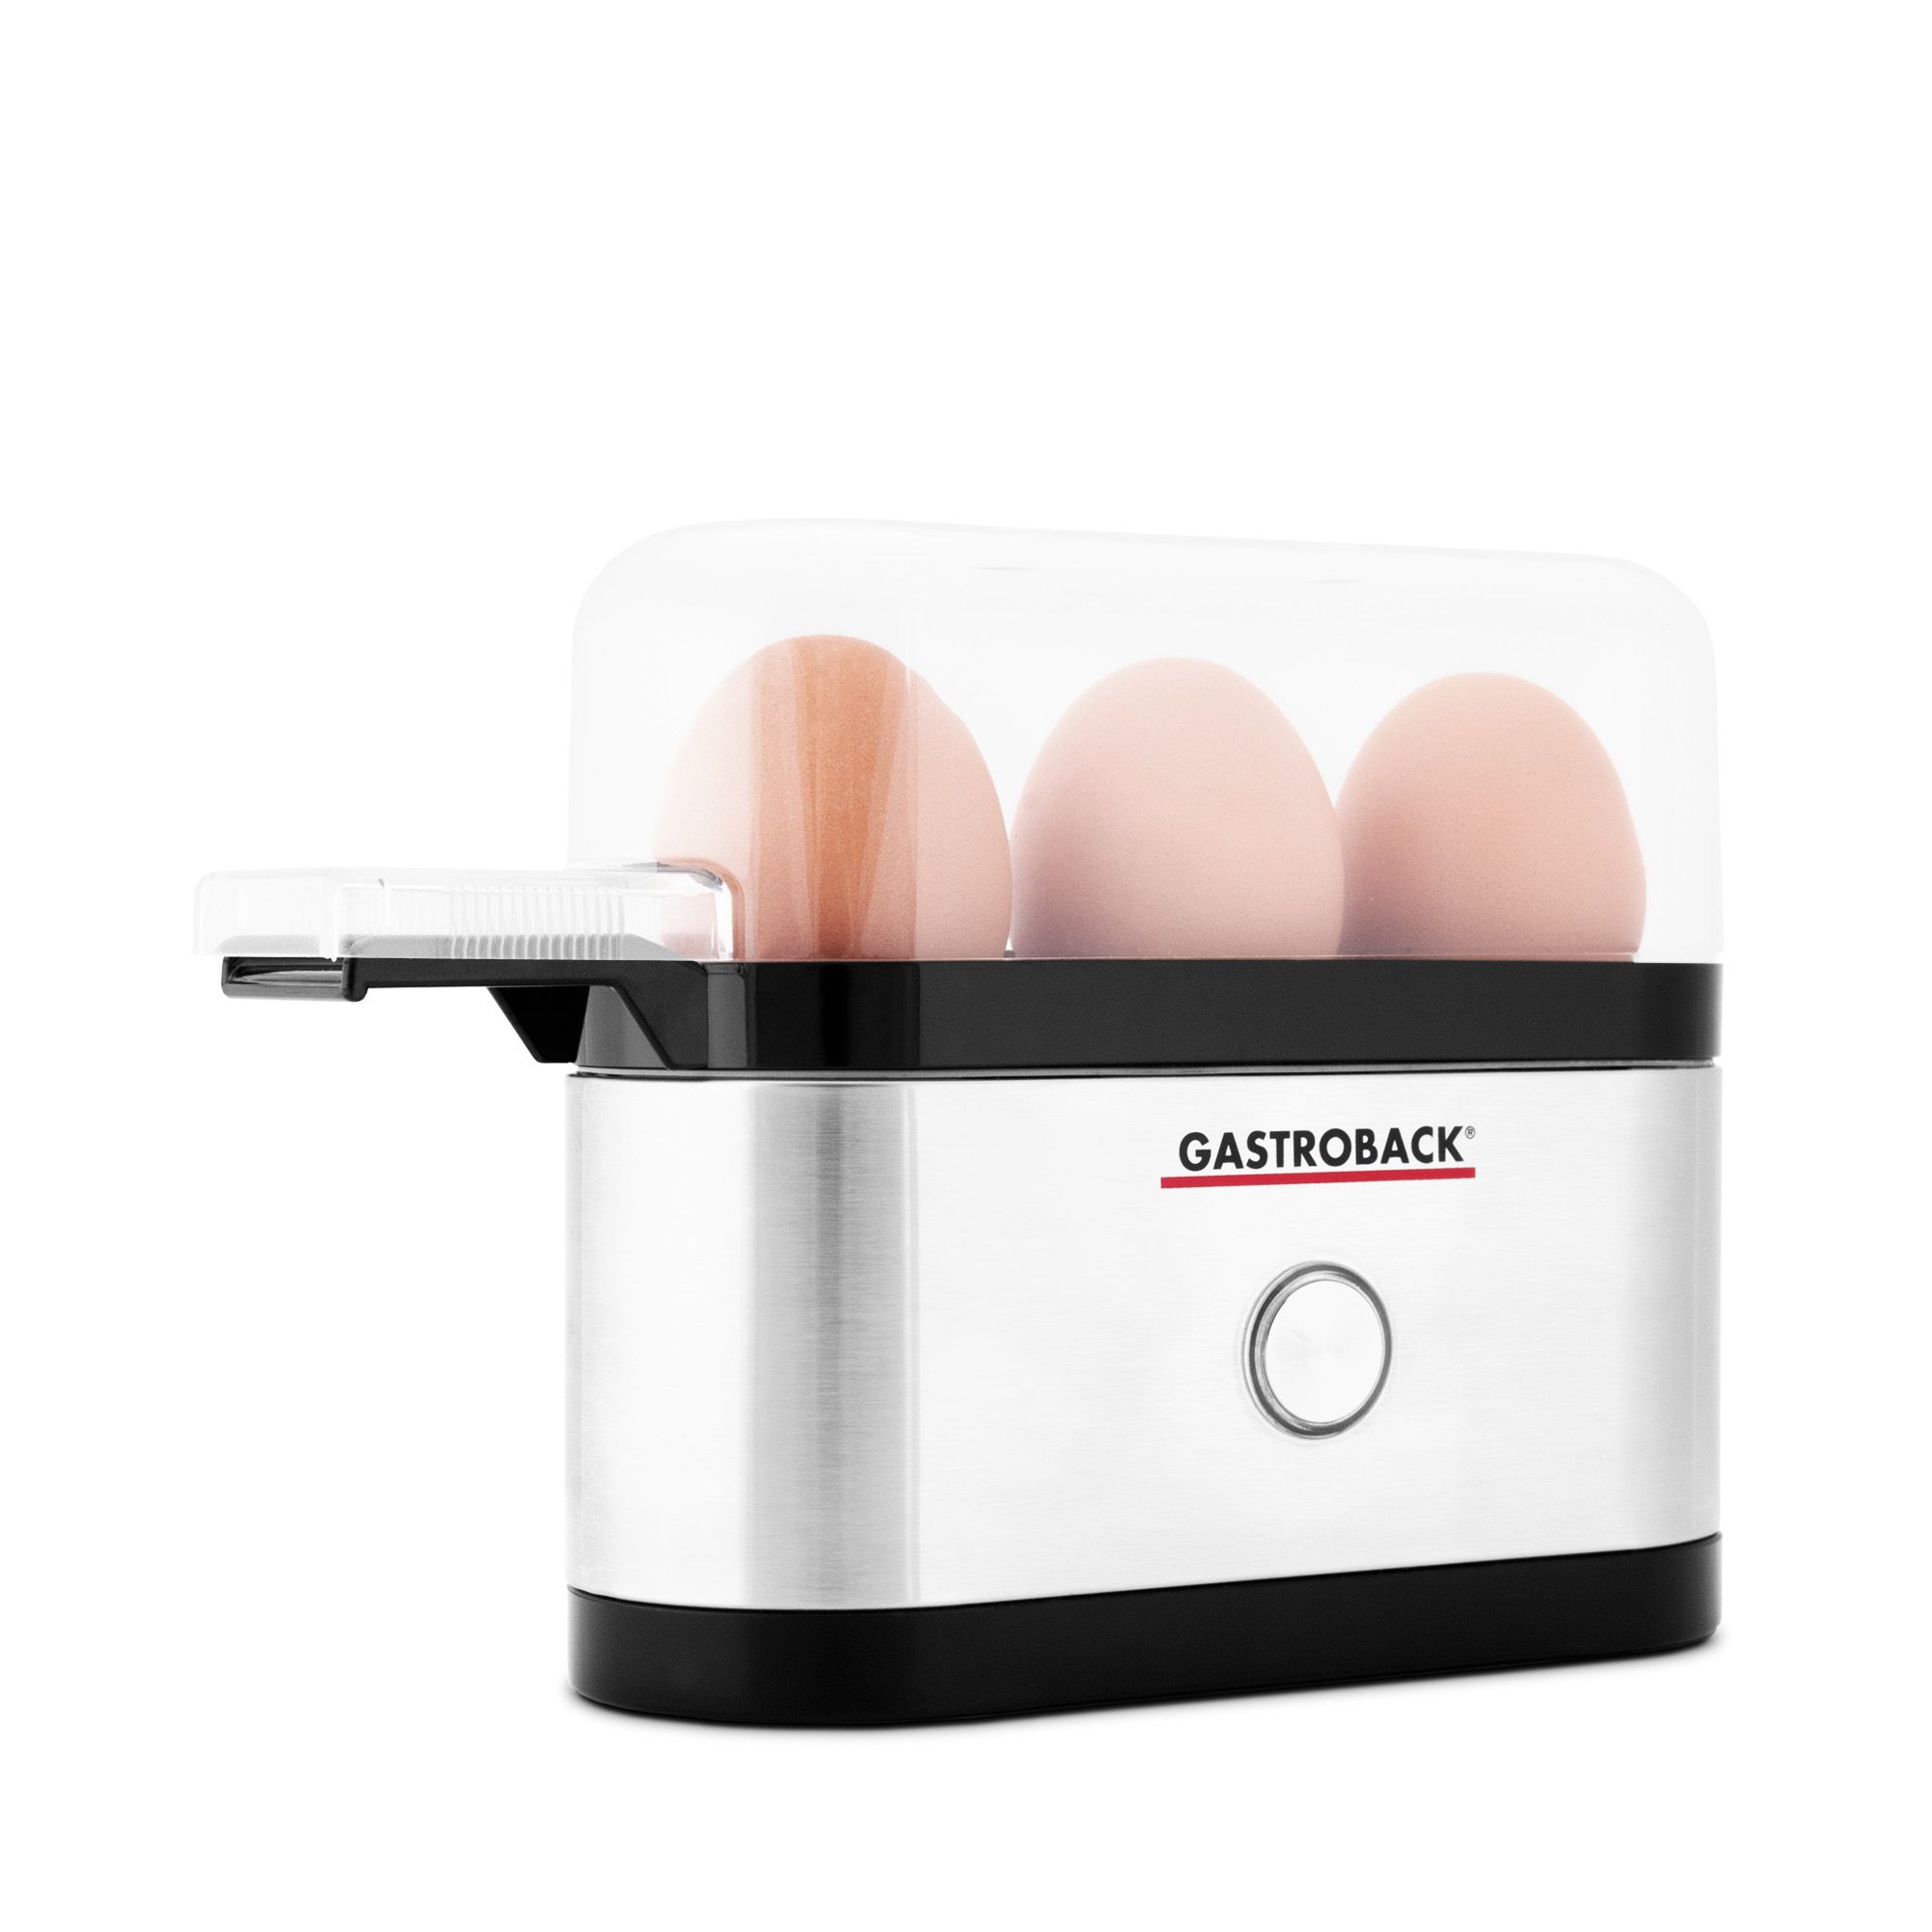 Gastroback - Eierkocher Design mini